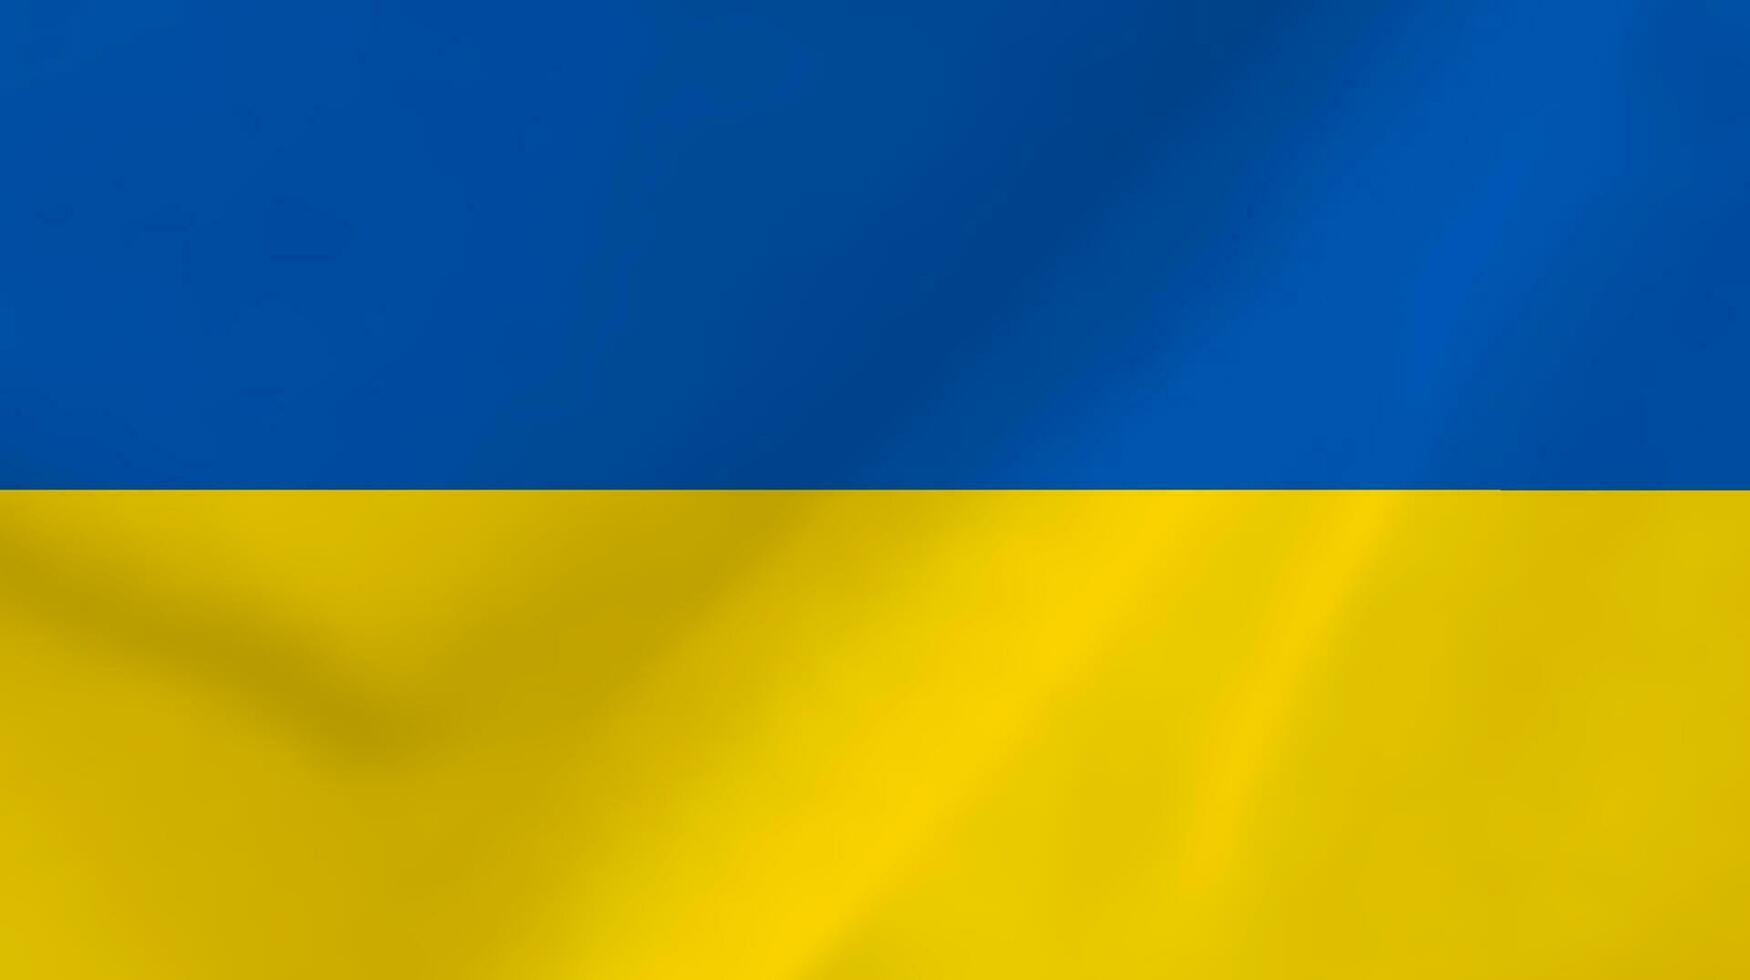 bandera nacional ucraniana vector